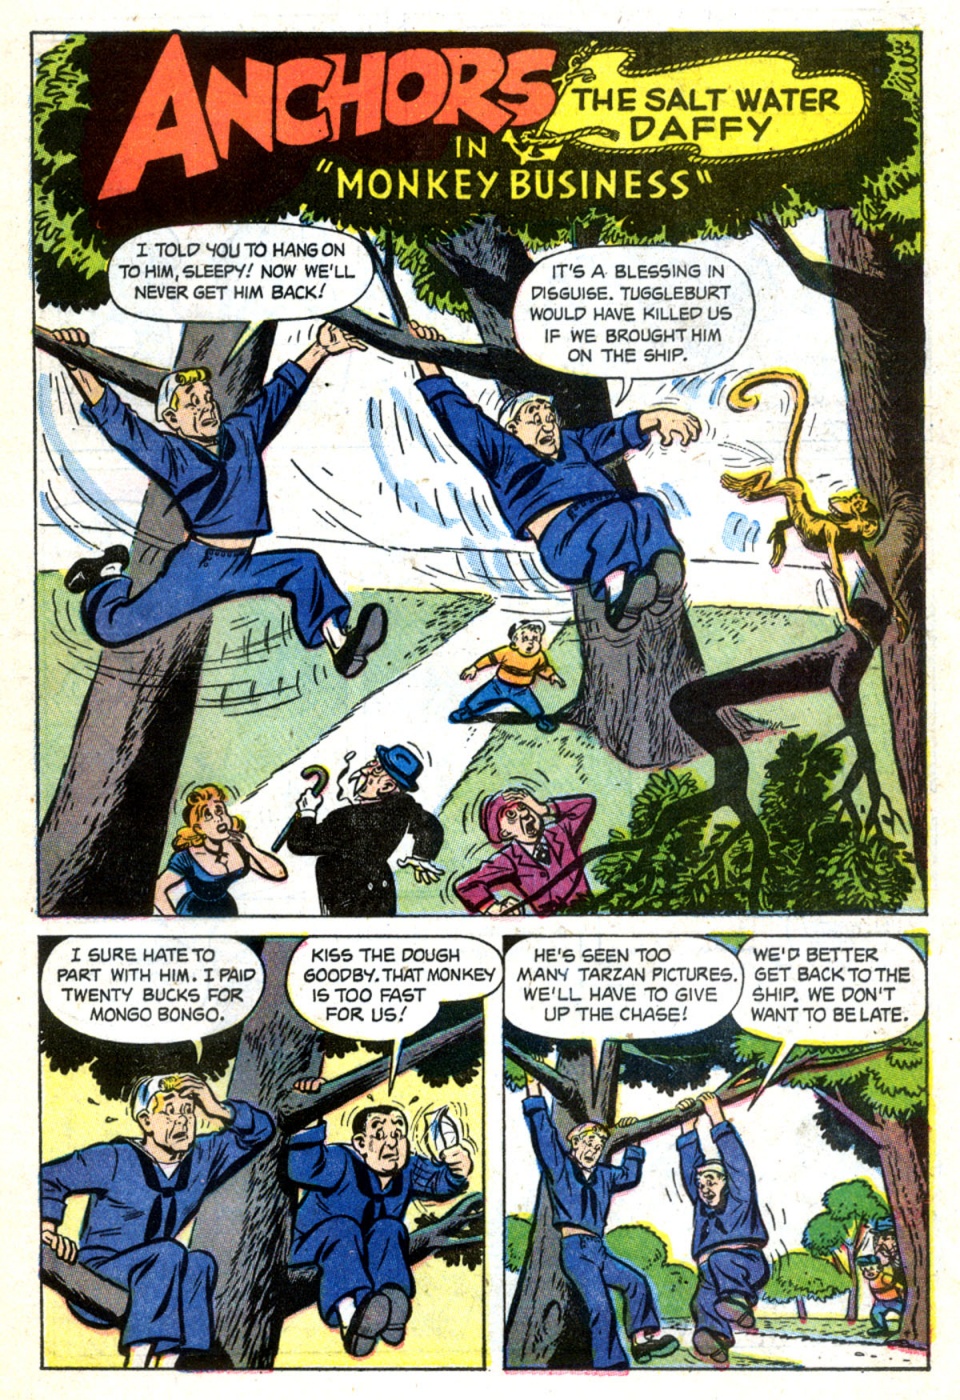 Anchors the Salt Water Daffy - Comics (c) (15)